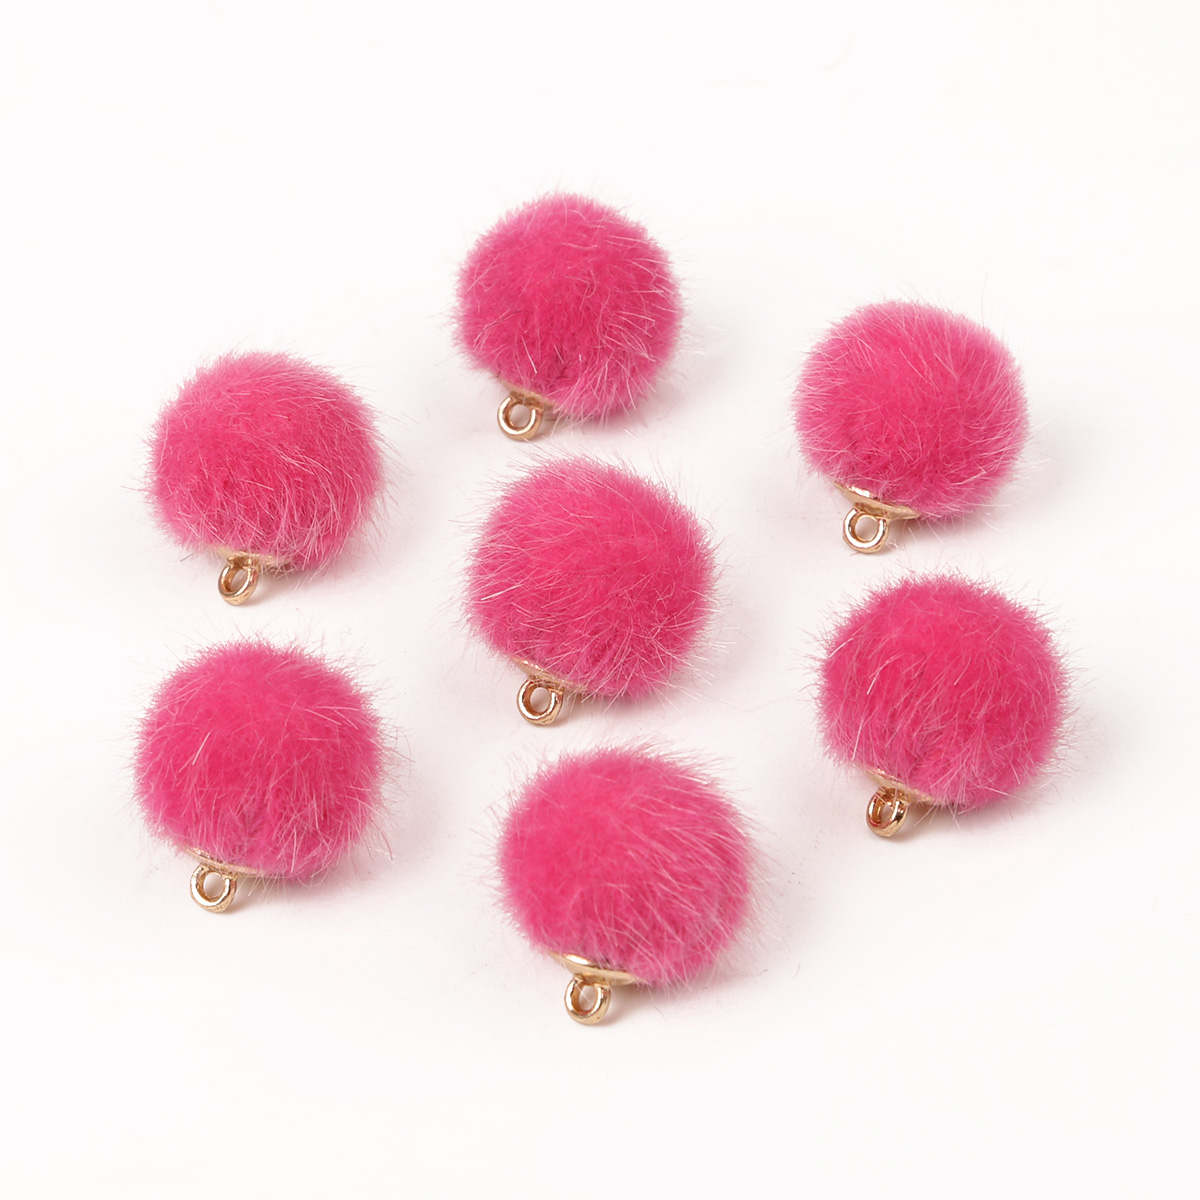 10Pcs Fabric Wrapped Acrylic Beads 15mm Pom Poms Ball Pendant Handmade DIY Sewing Craft Garment Supplies Cloth Decorations